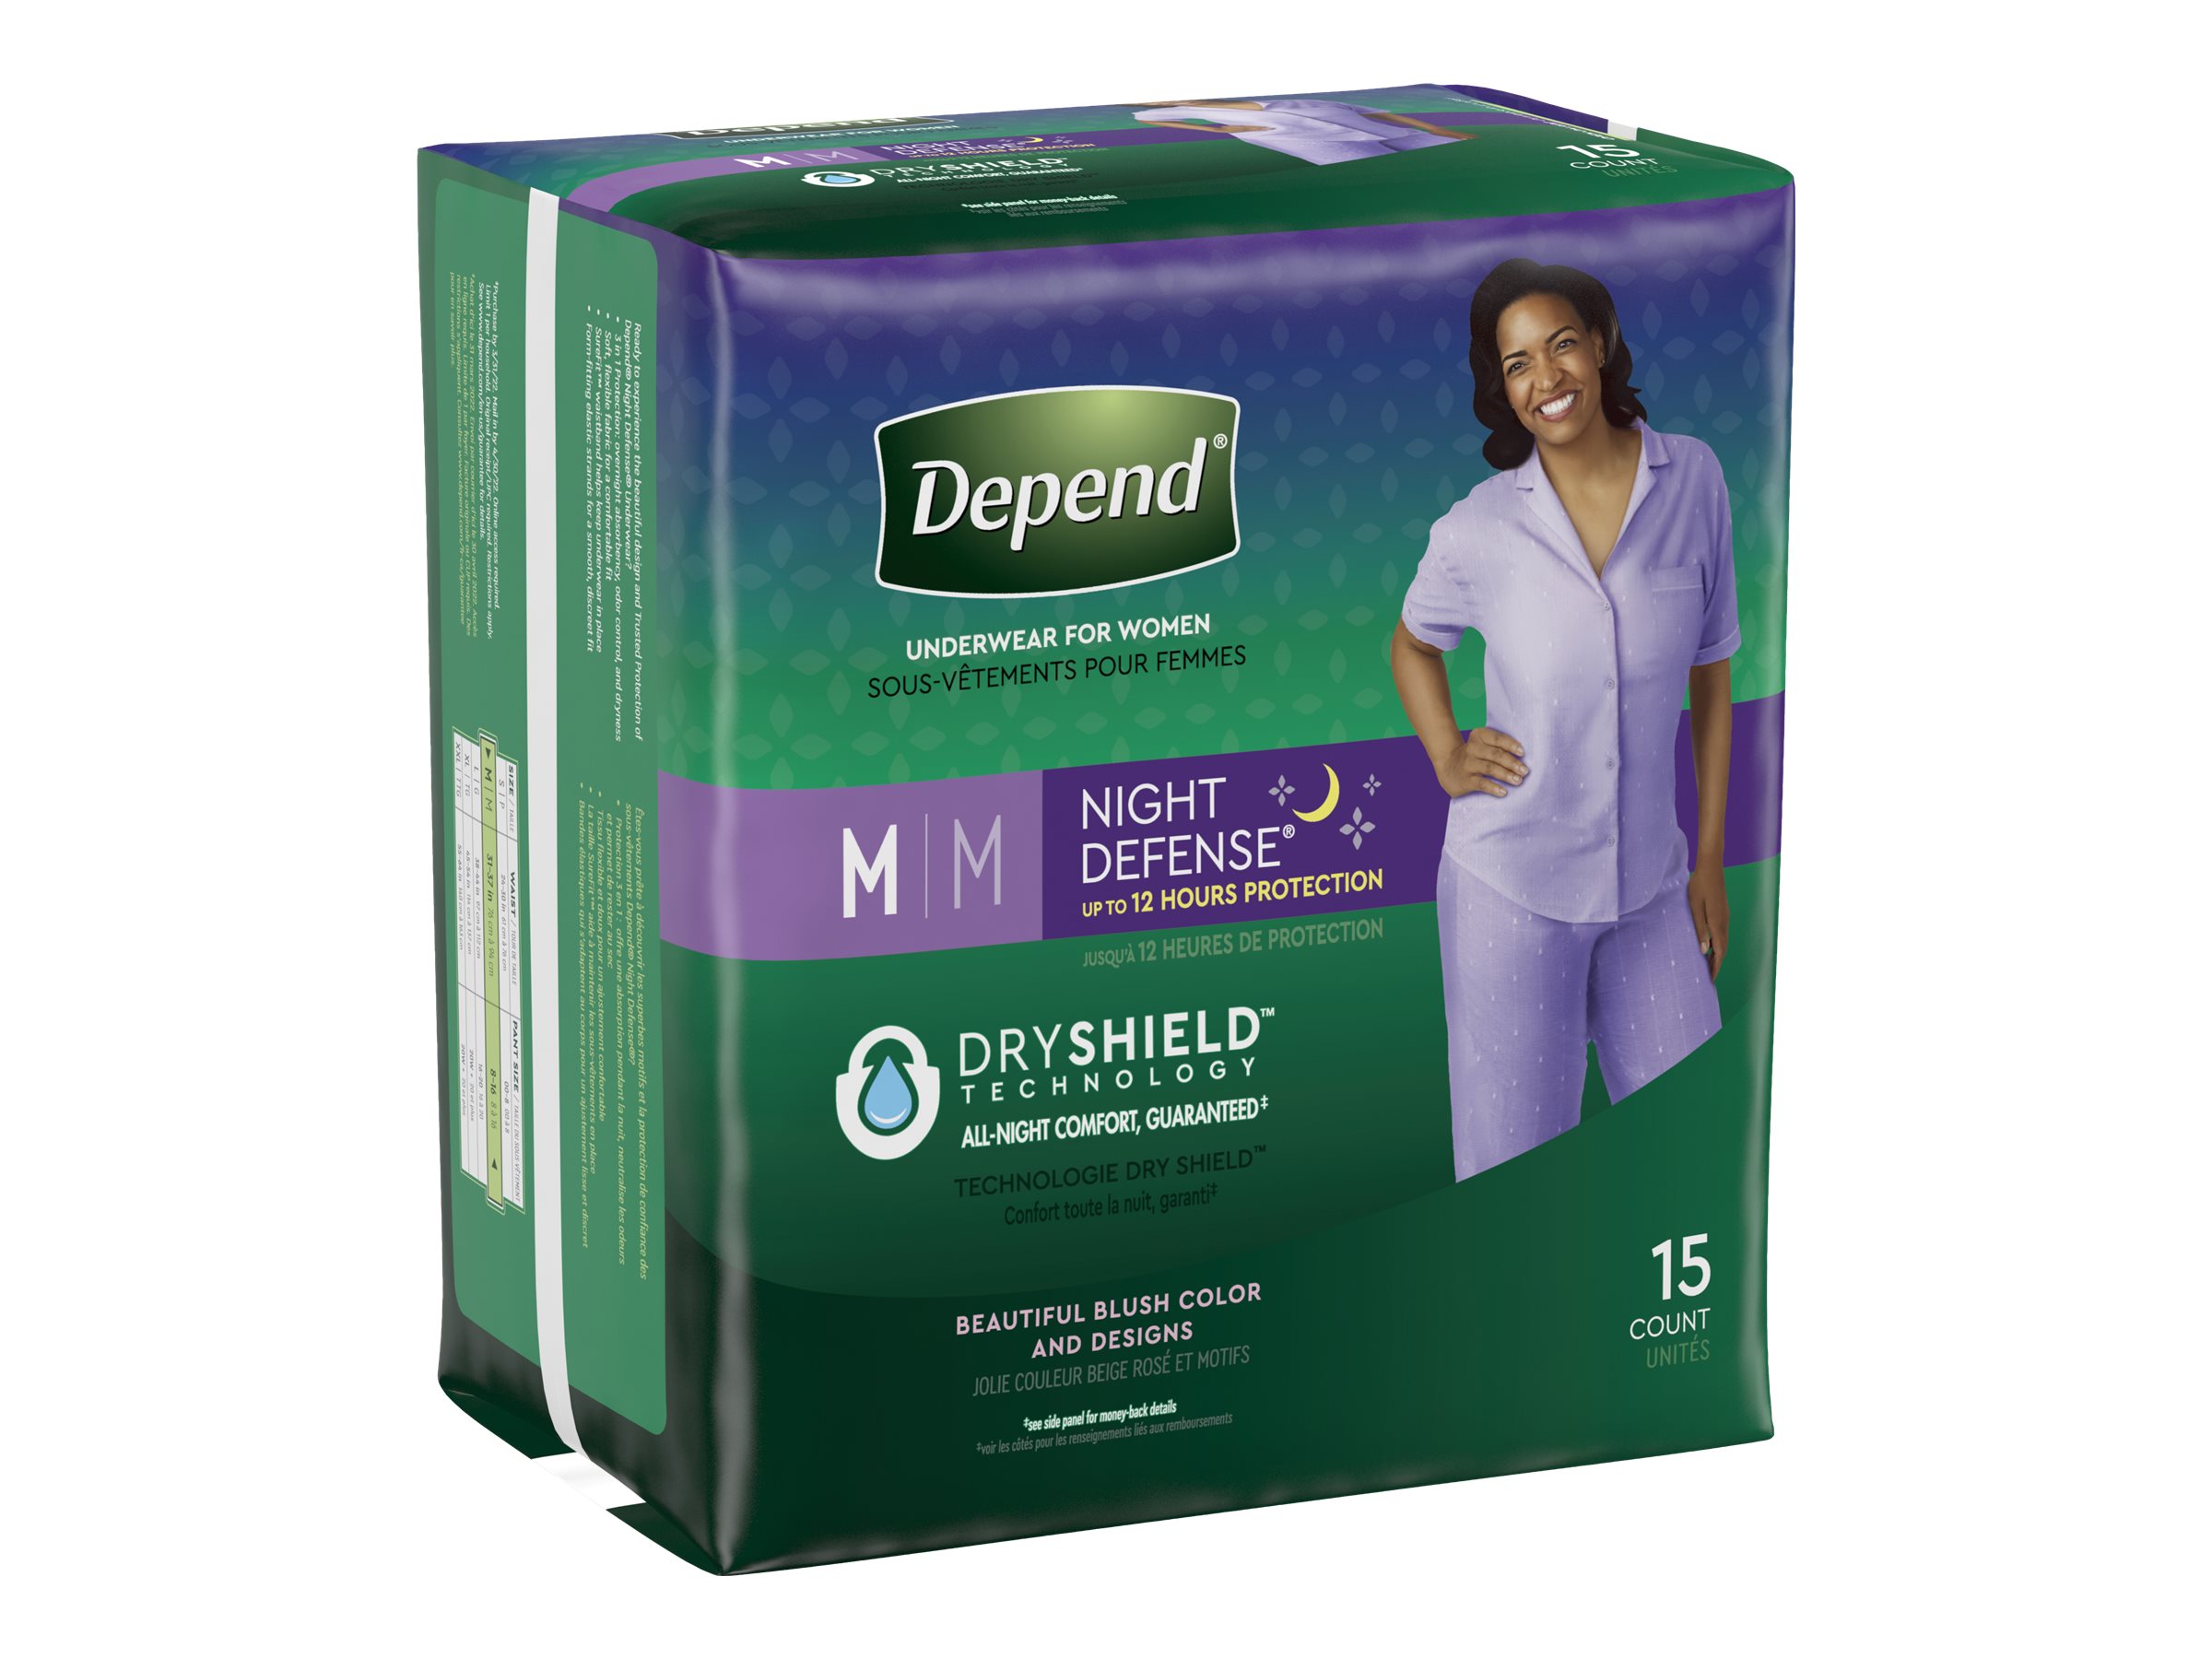 Depend Night Defense Incontinence Overnight Underwear for Women, S